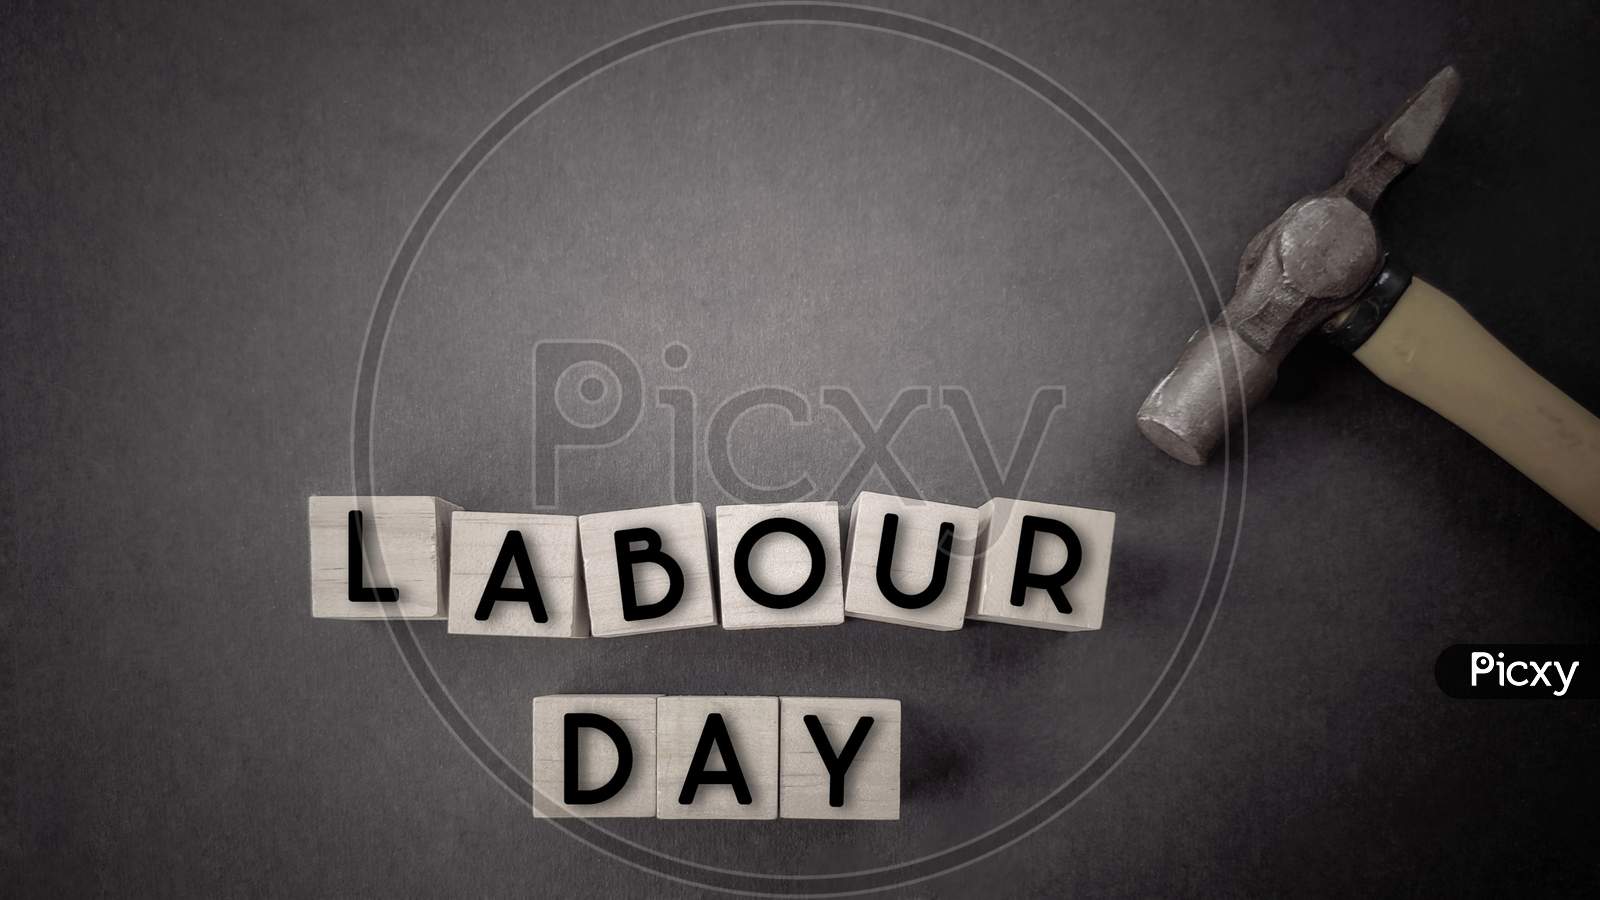 Labour Day concept